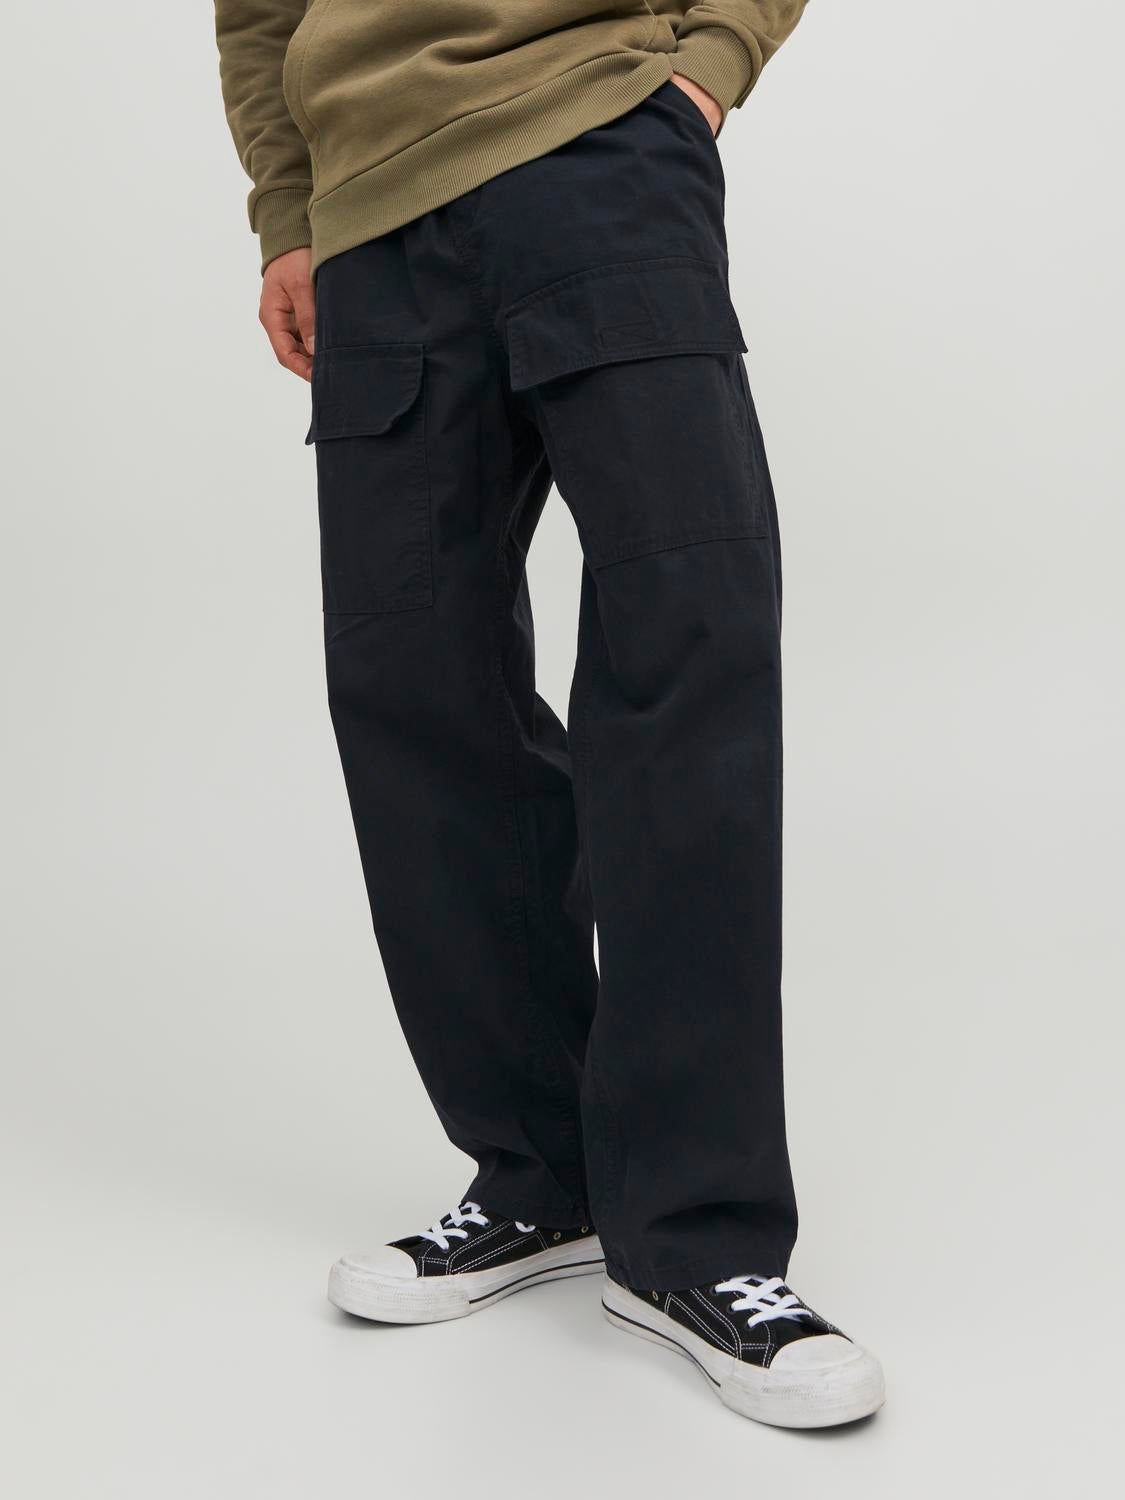 Relaxed Fit Cargo Pants - Beige - Men | H&M US